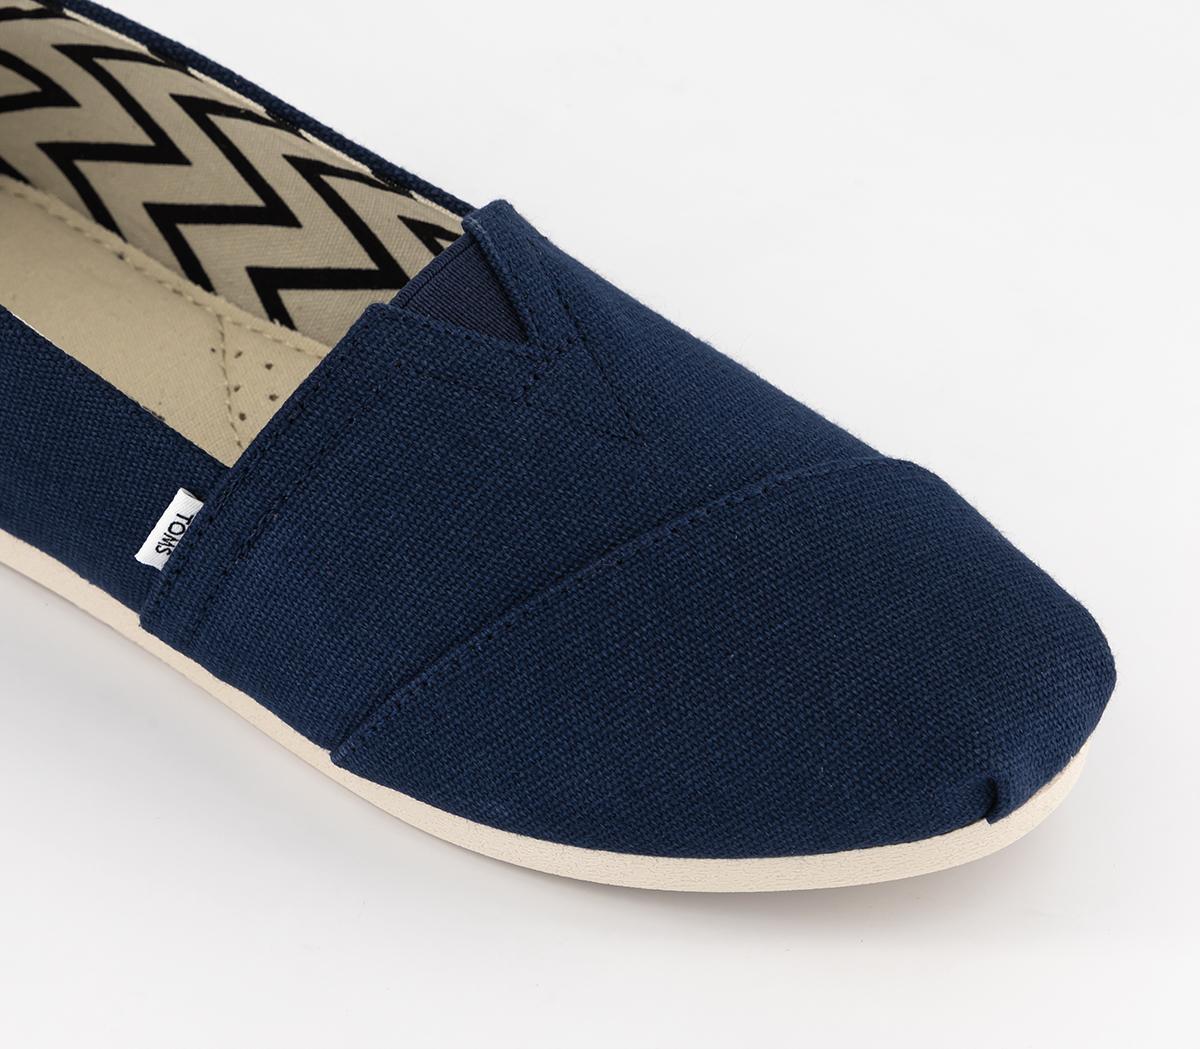 TOMS Alpargata Slip Ons Navy - Flat Shoes for Women